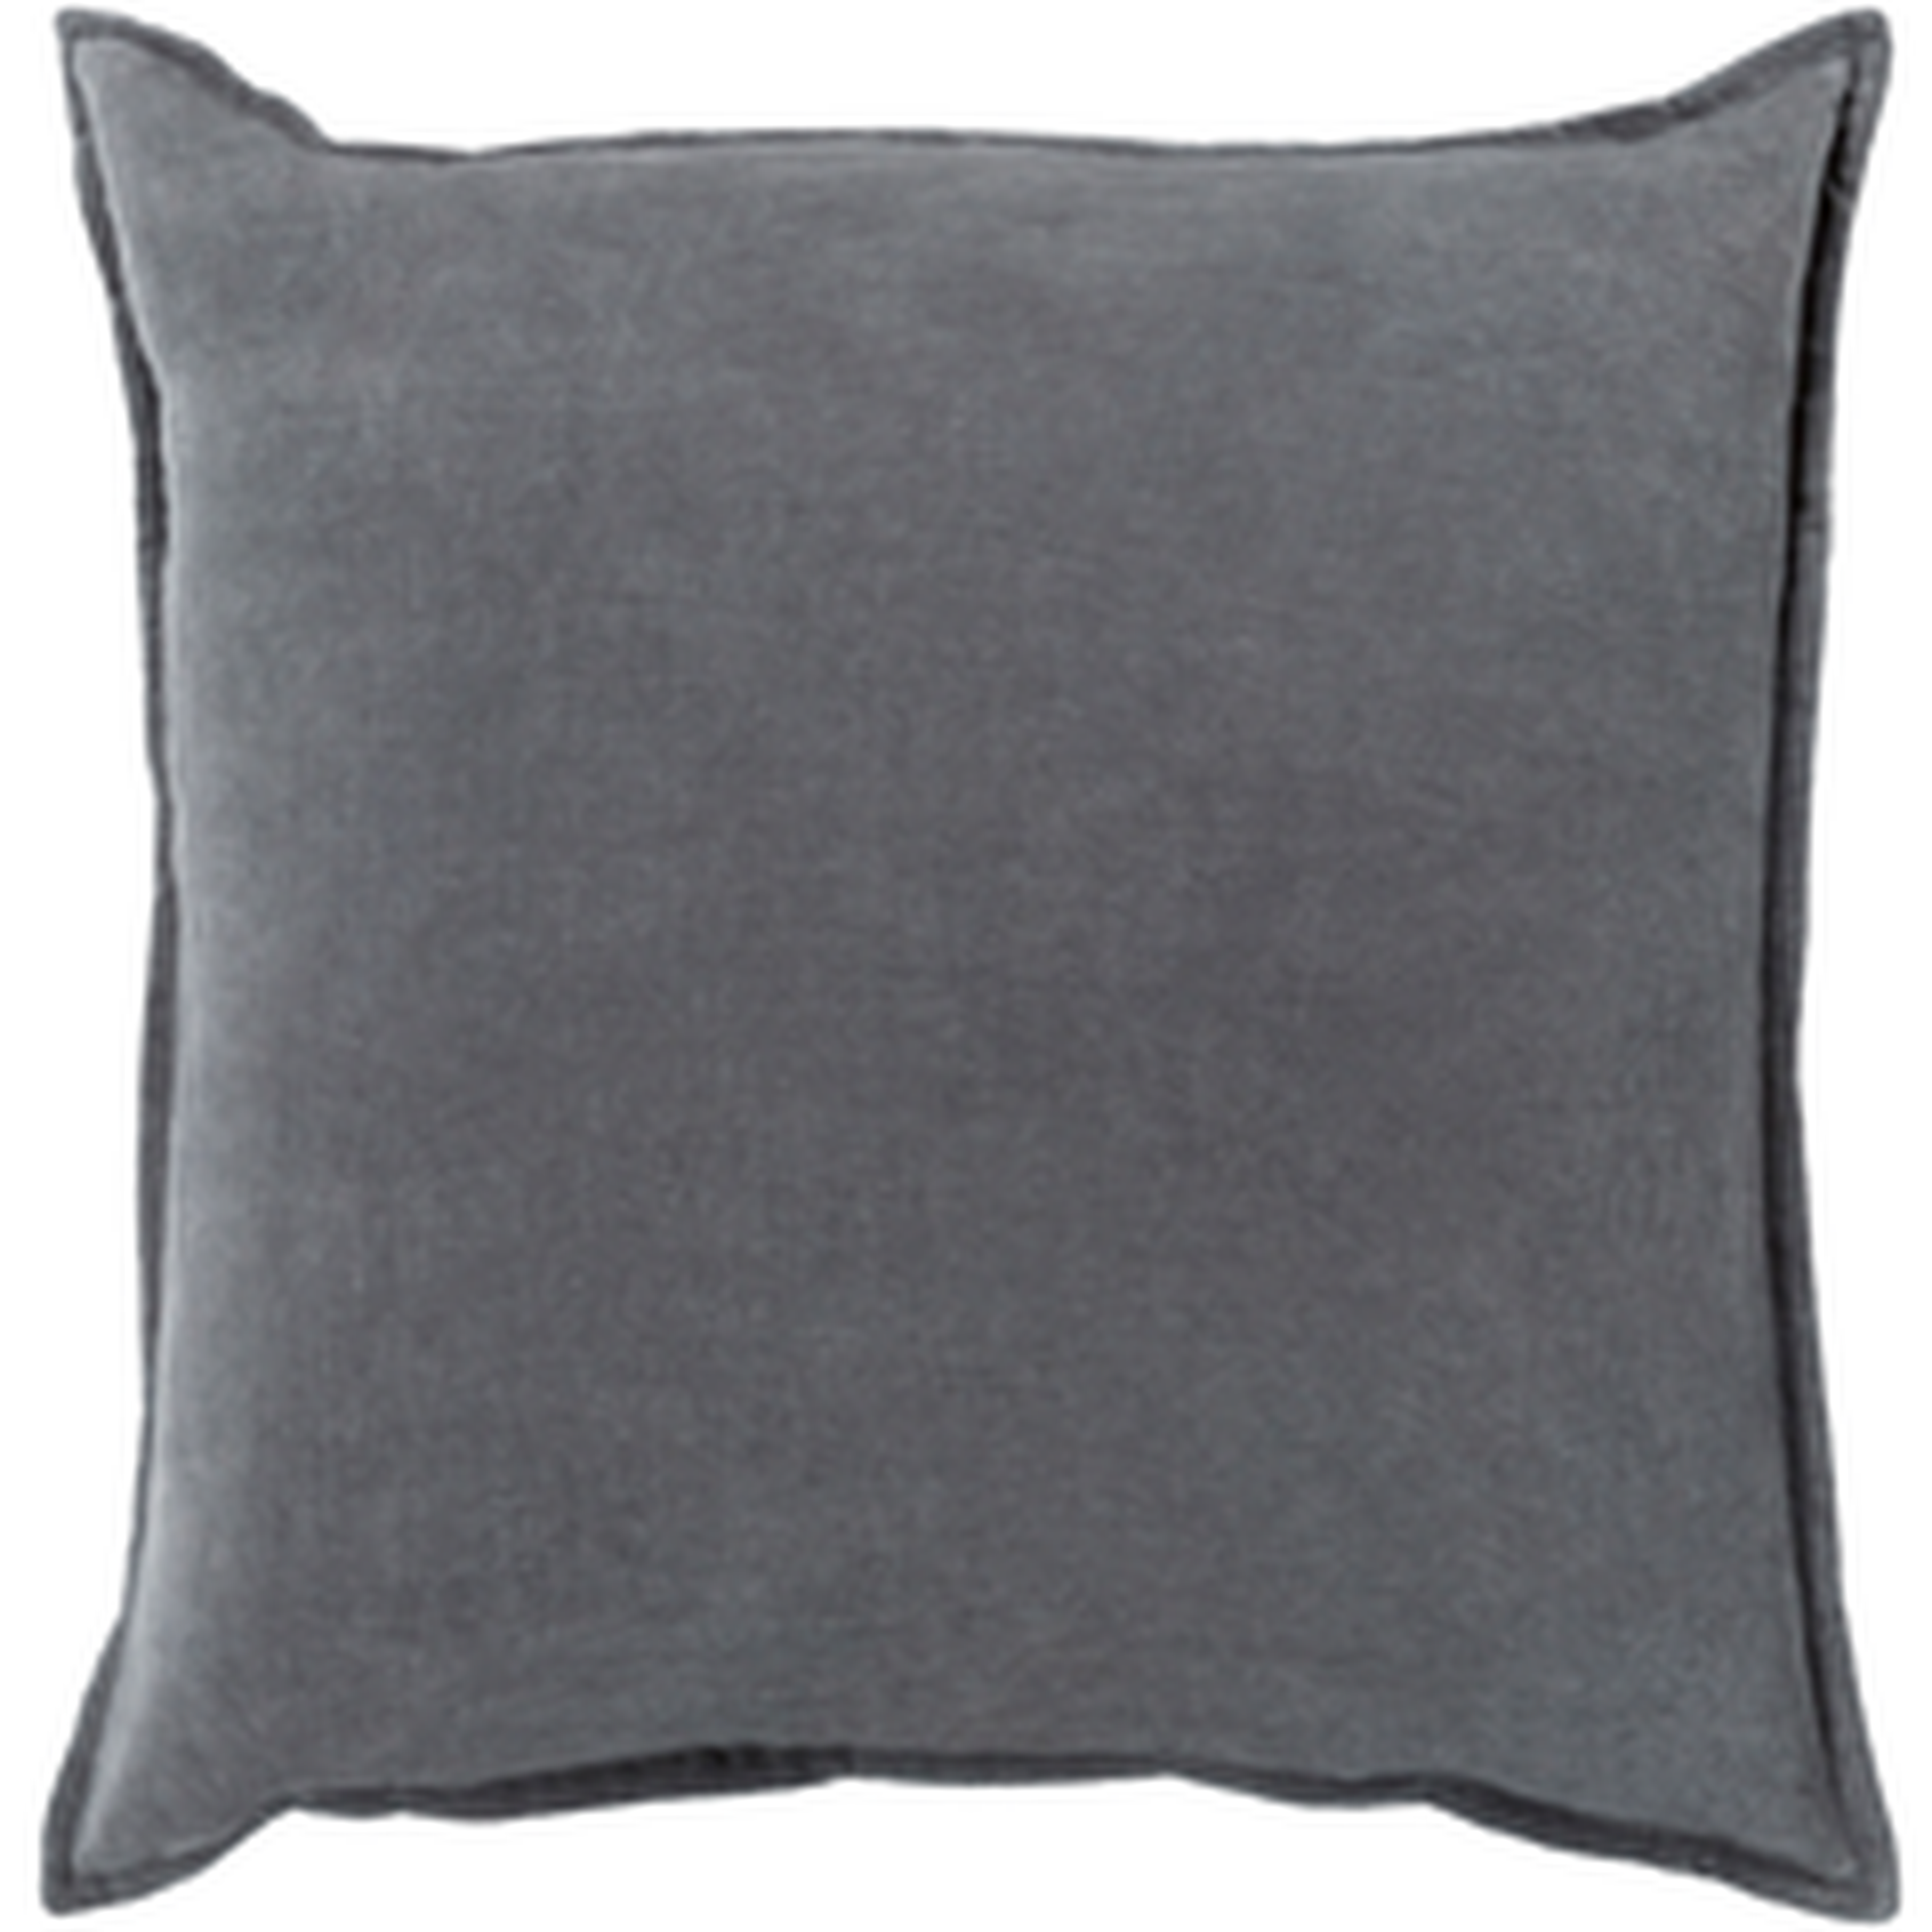 Cotton Velvet Pillow - 20x20" - Down Insert - Surya